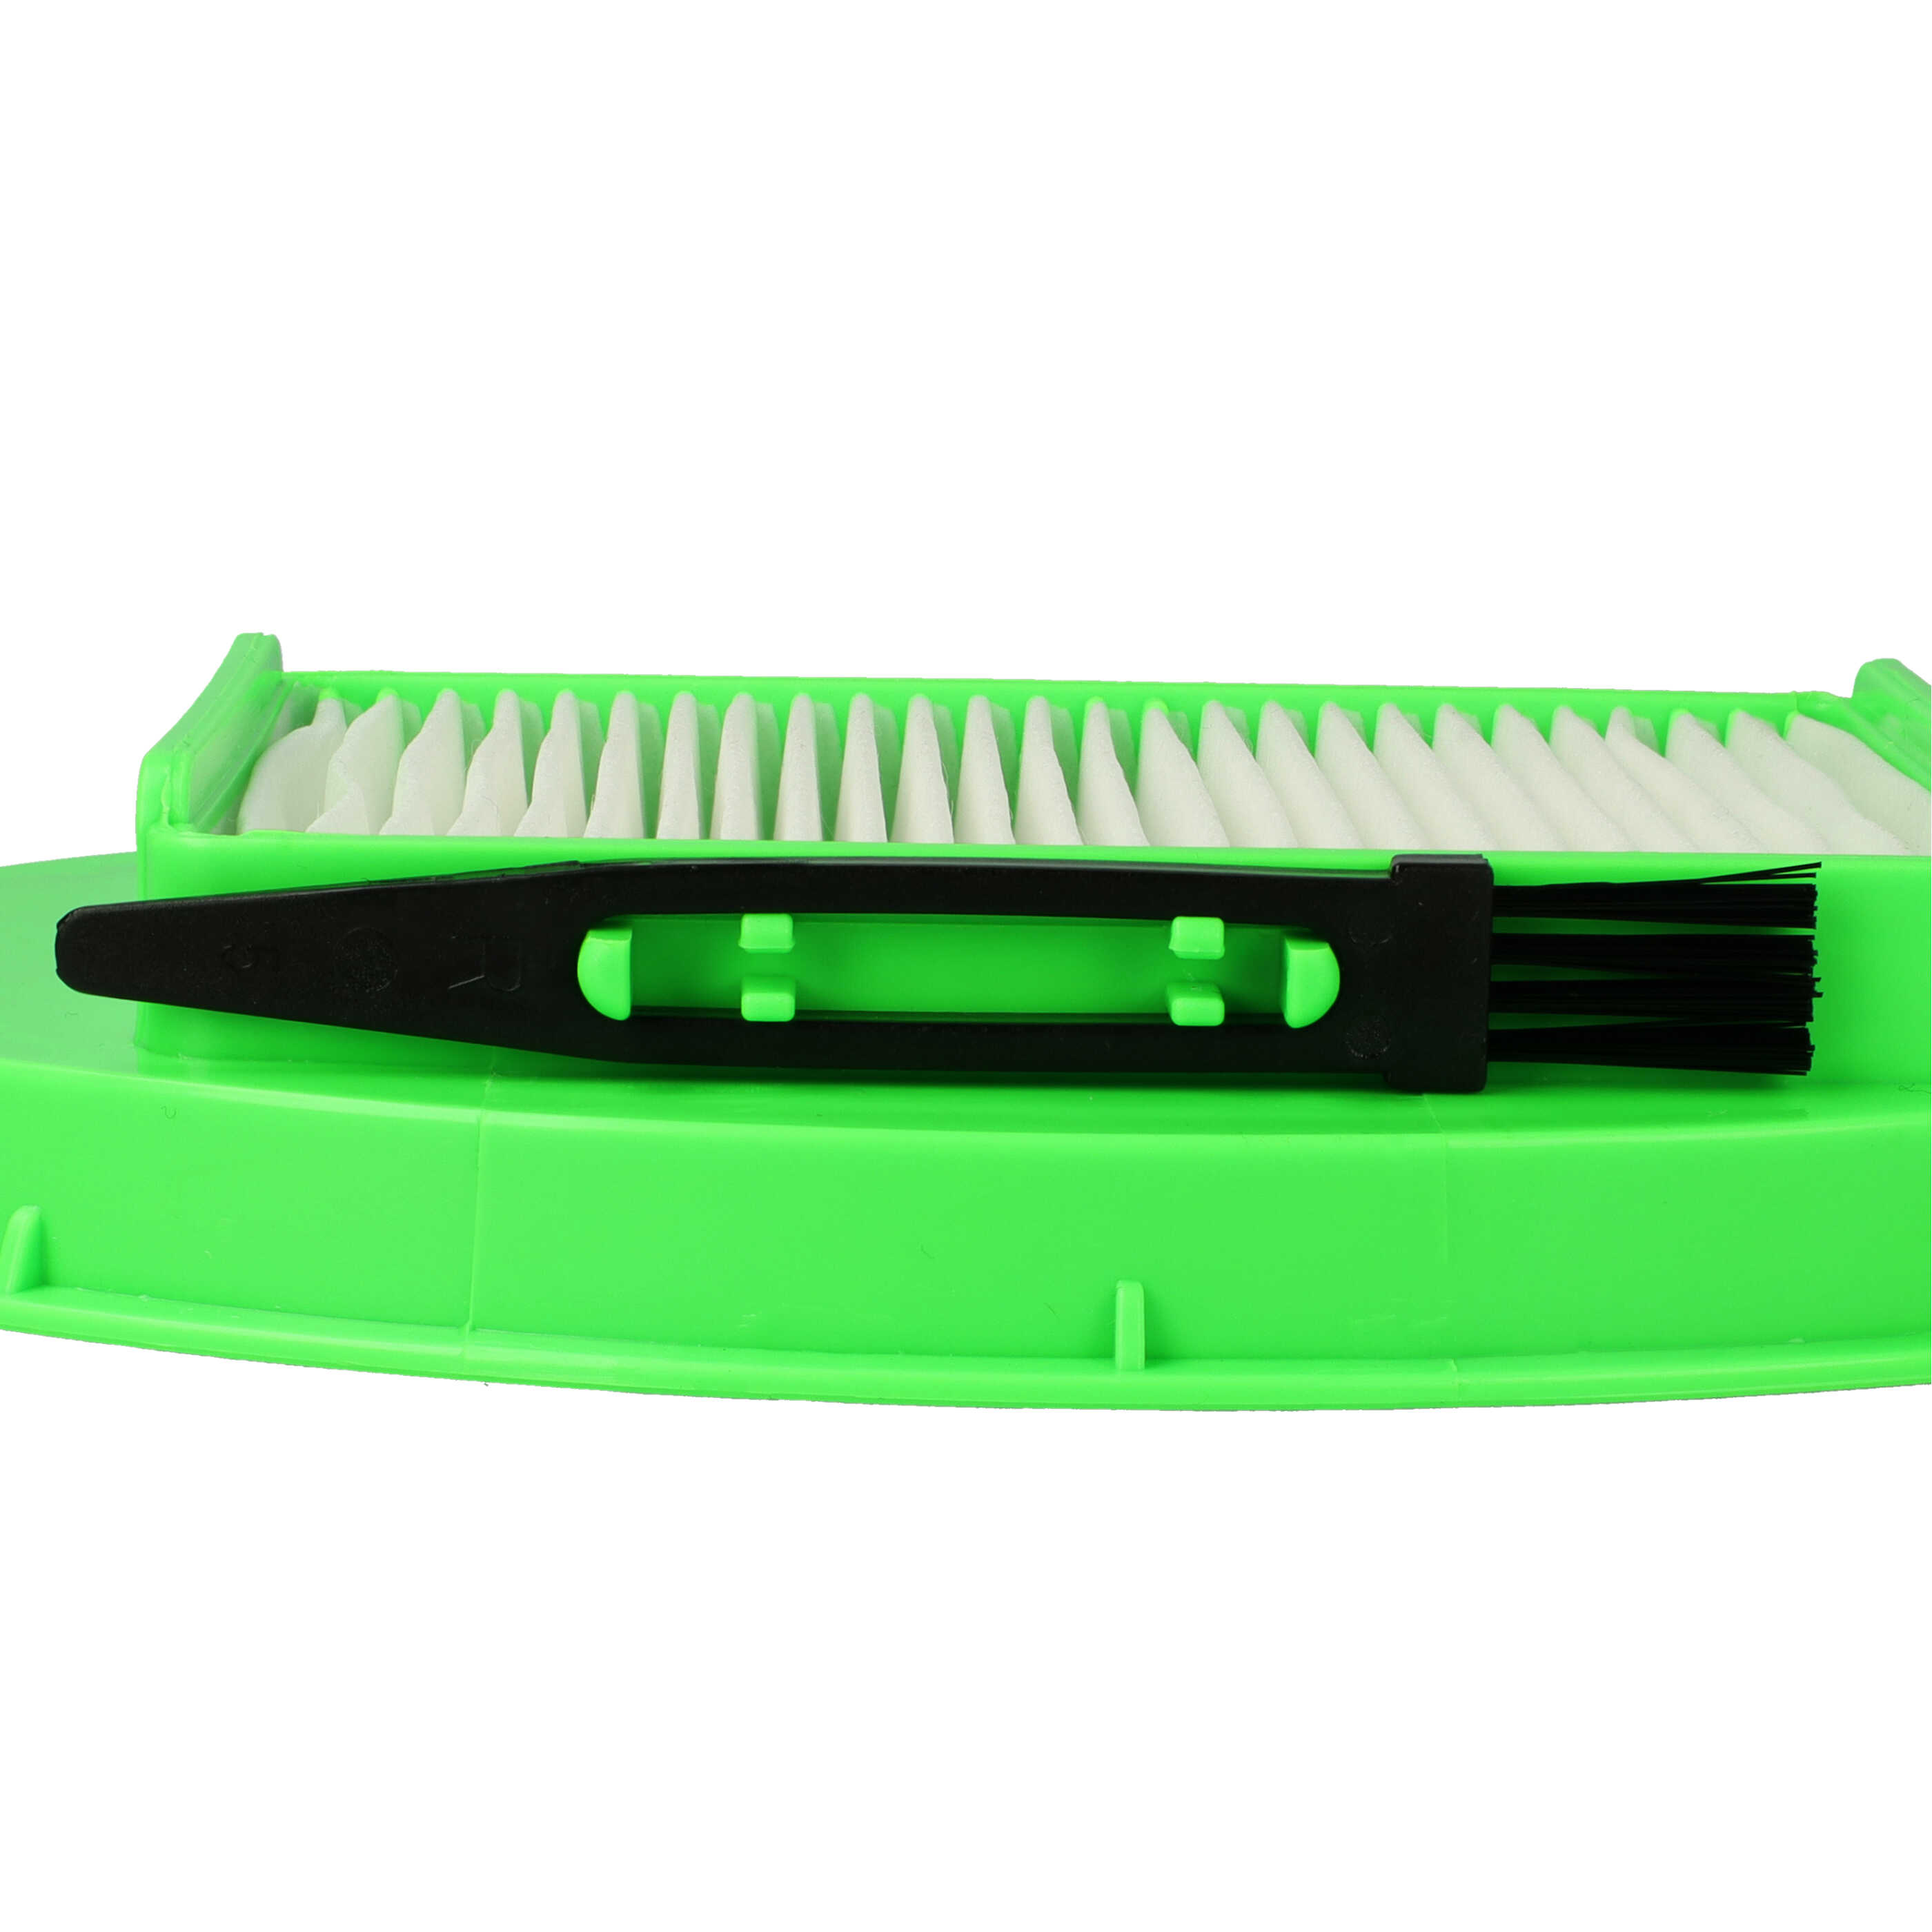 4-Part Filter/Brush Set replaces Rowenta ZR005701 for Moulinex Vacuum Cleaner etc. 